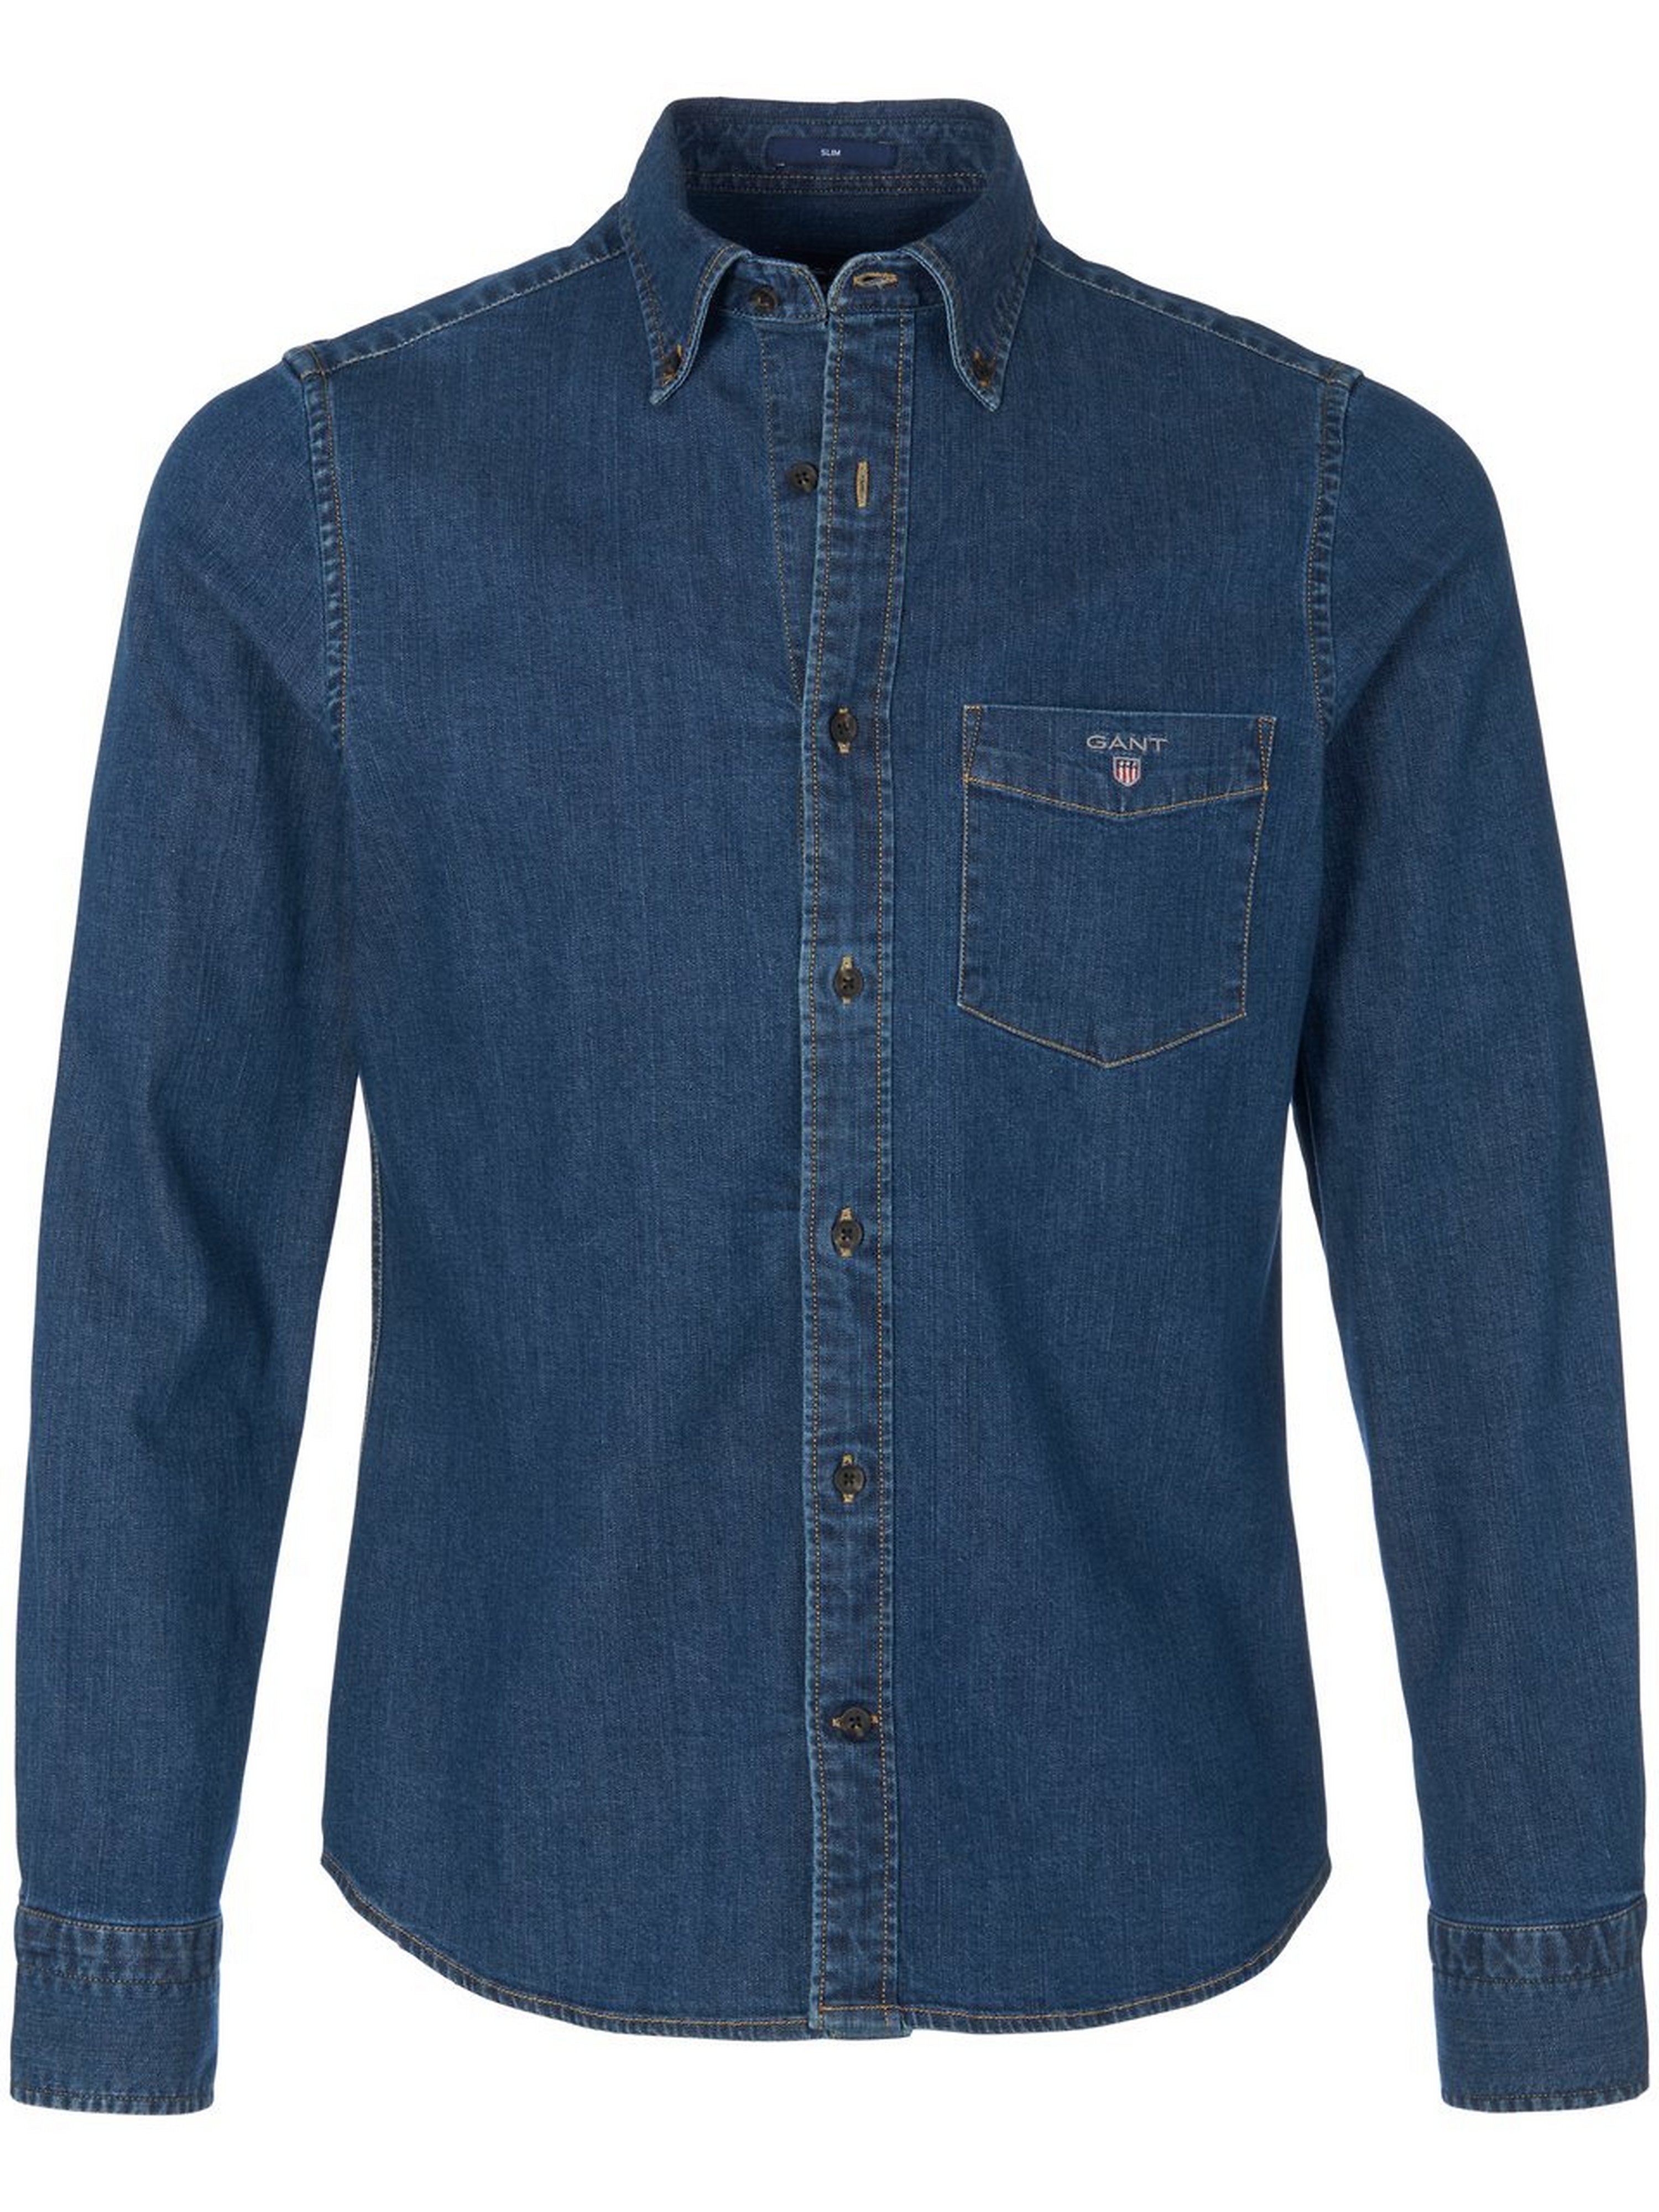 GANT Jeansoverhemd in smalle pasvorm Van denim